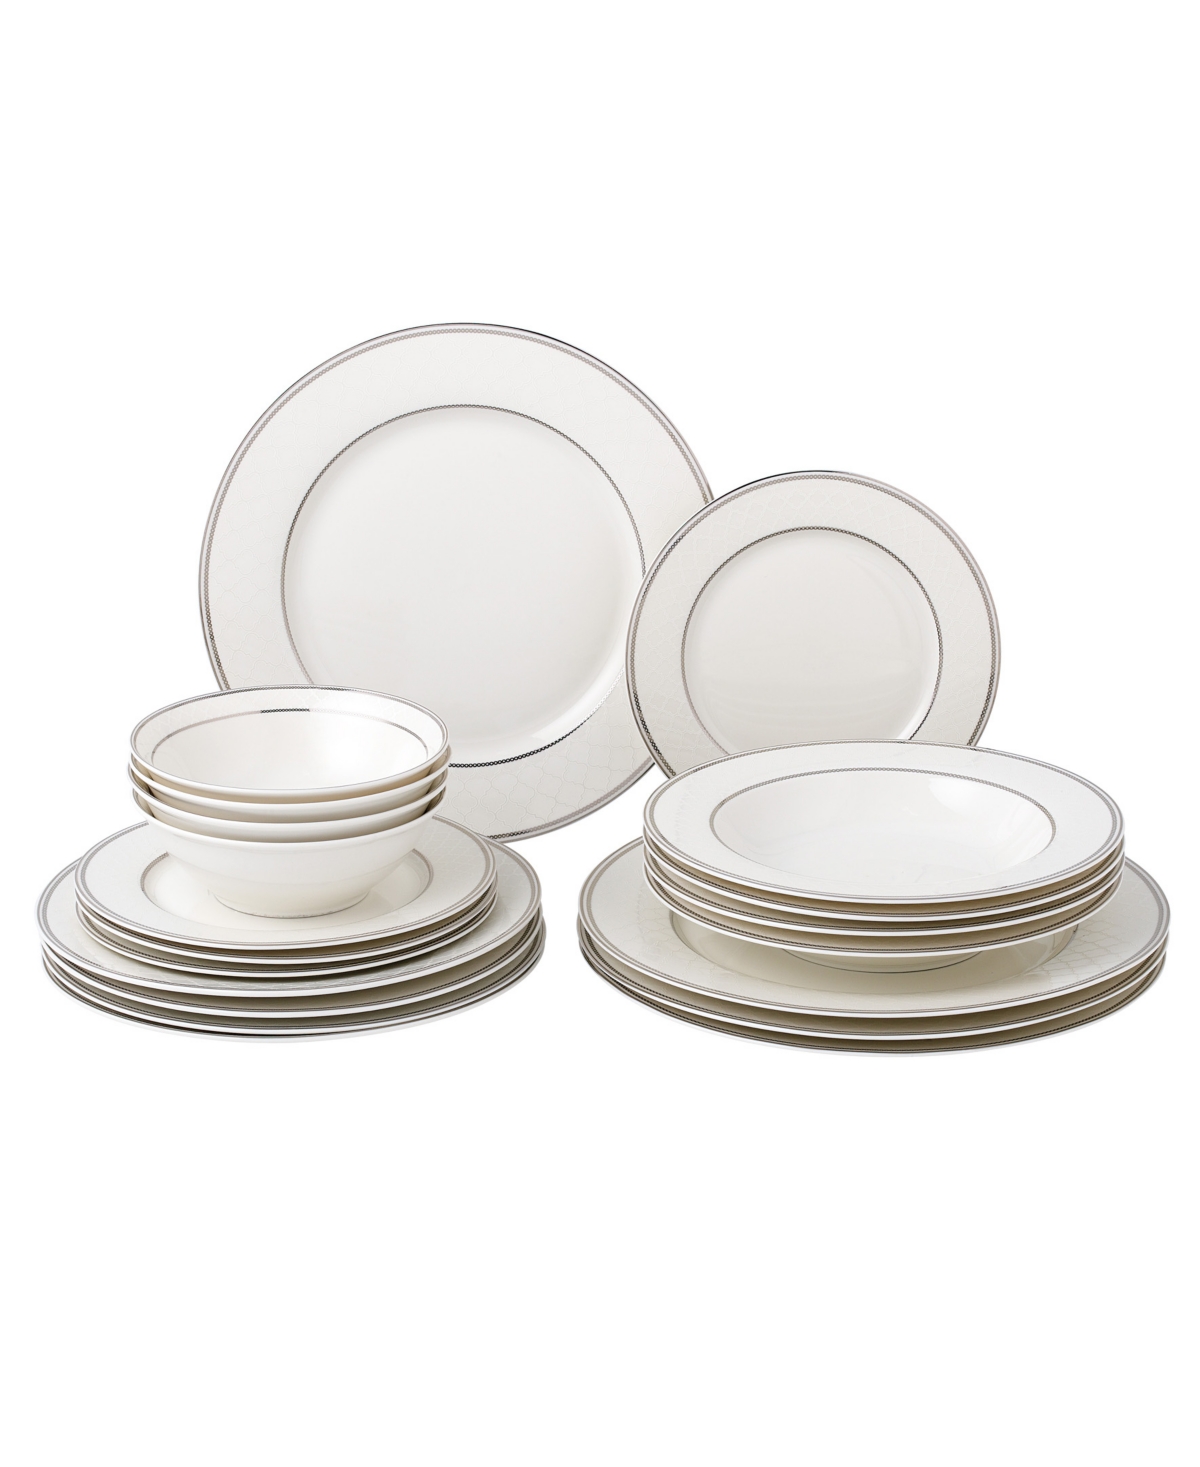 Lorren Home Trends 20 Piece Service For 4 Dinnerware Set In Silver